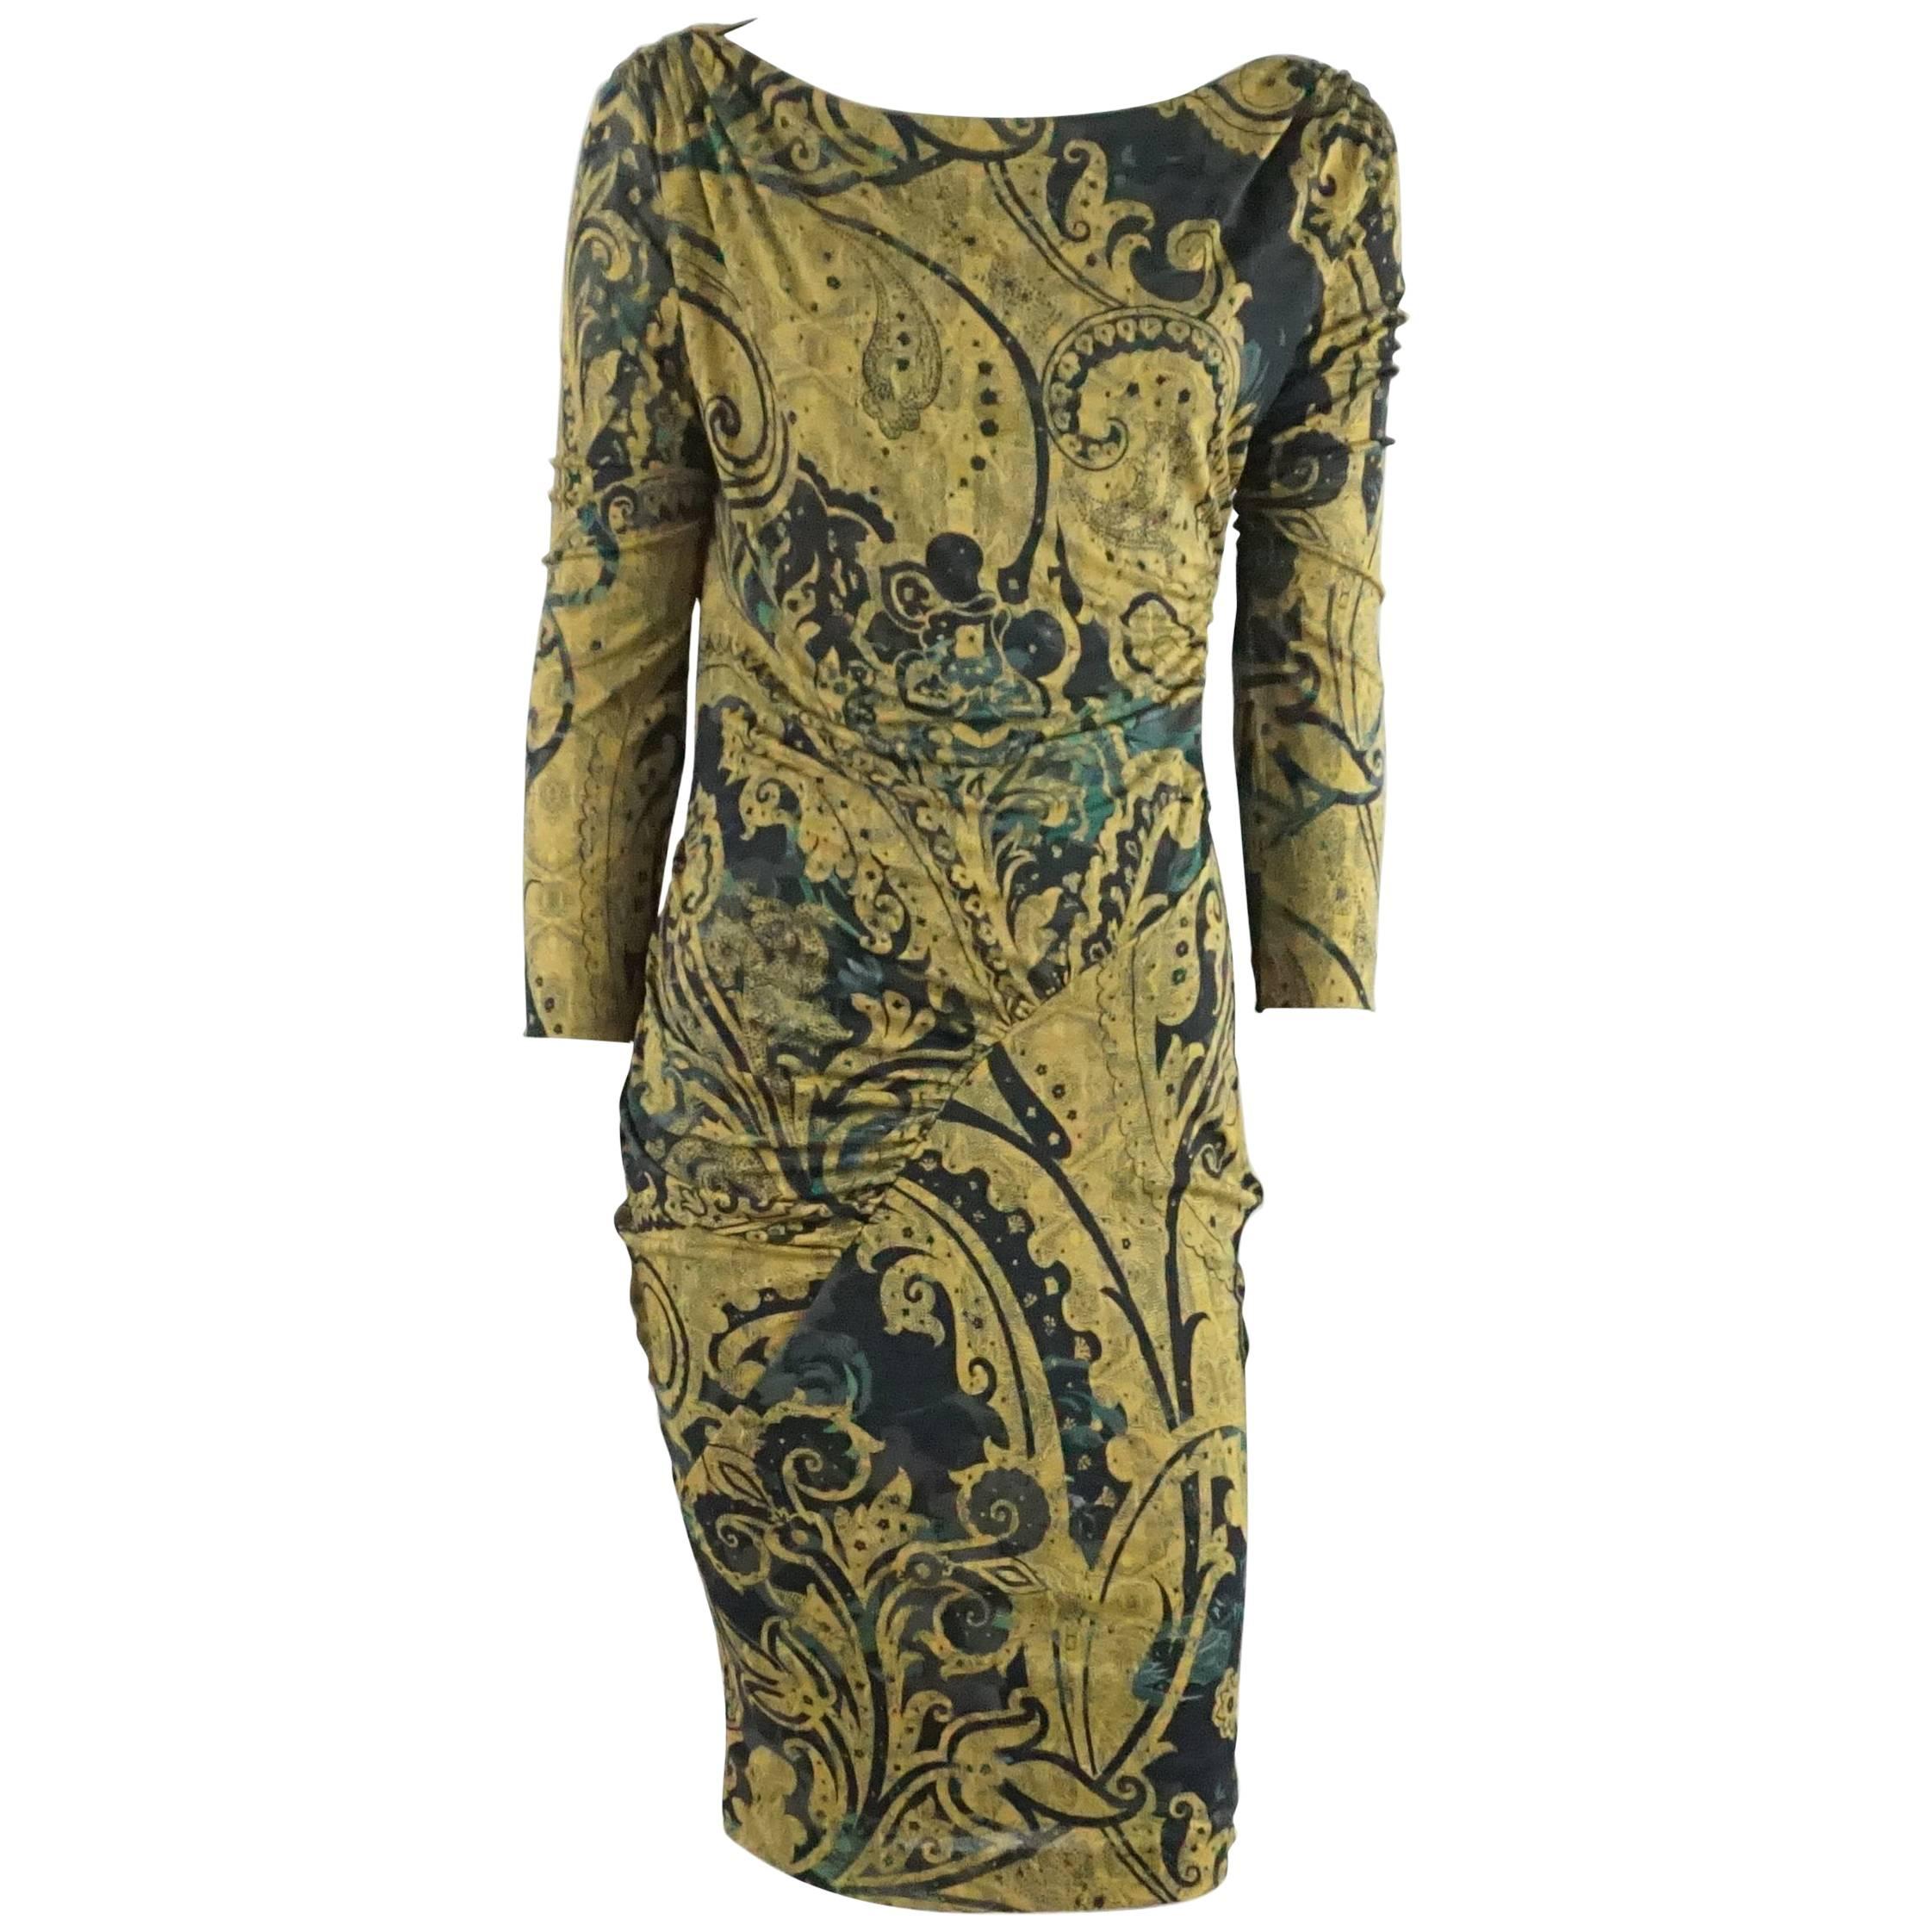 Etro Black and Gold Paisley Print Dress - M